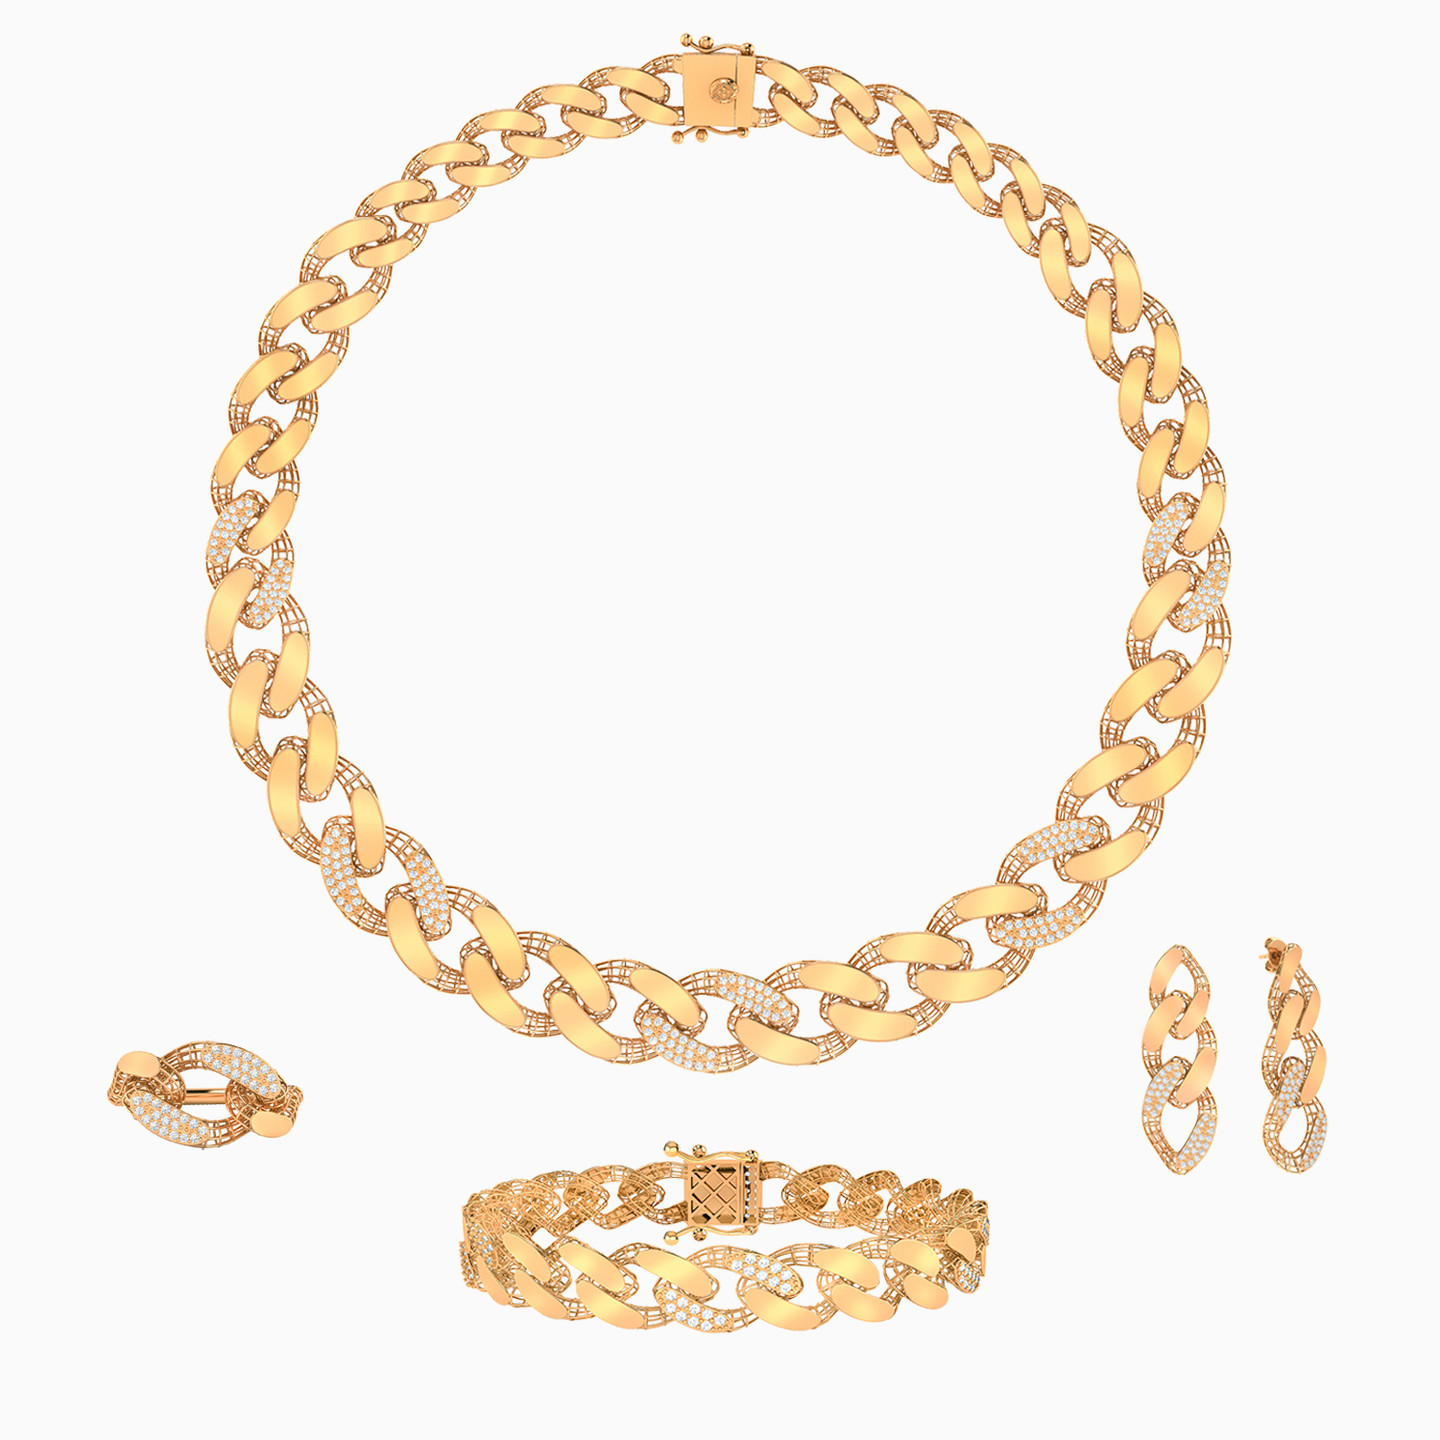 21K Gold Cubic Zirconia Jewelry Set - 4 Pieces